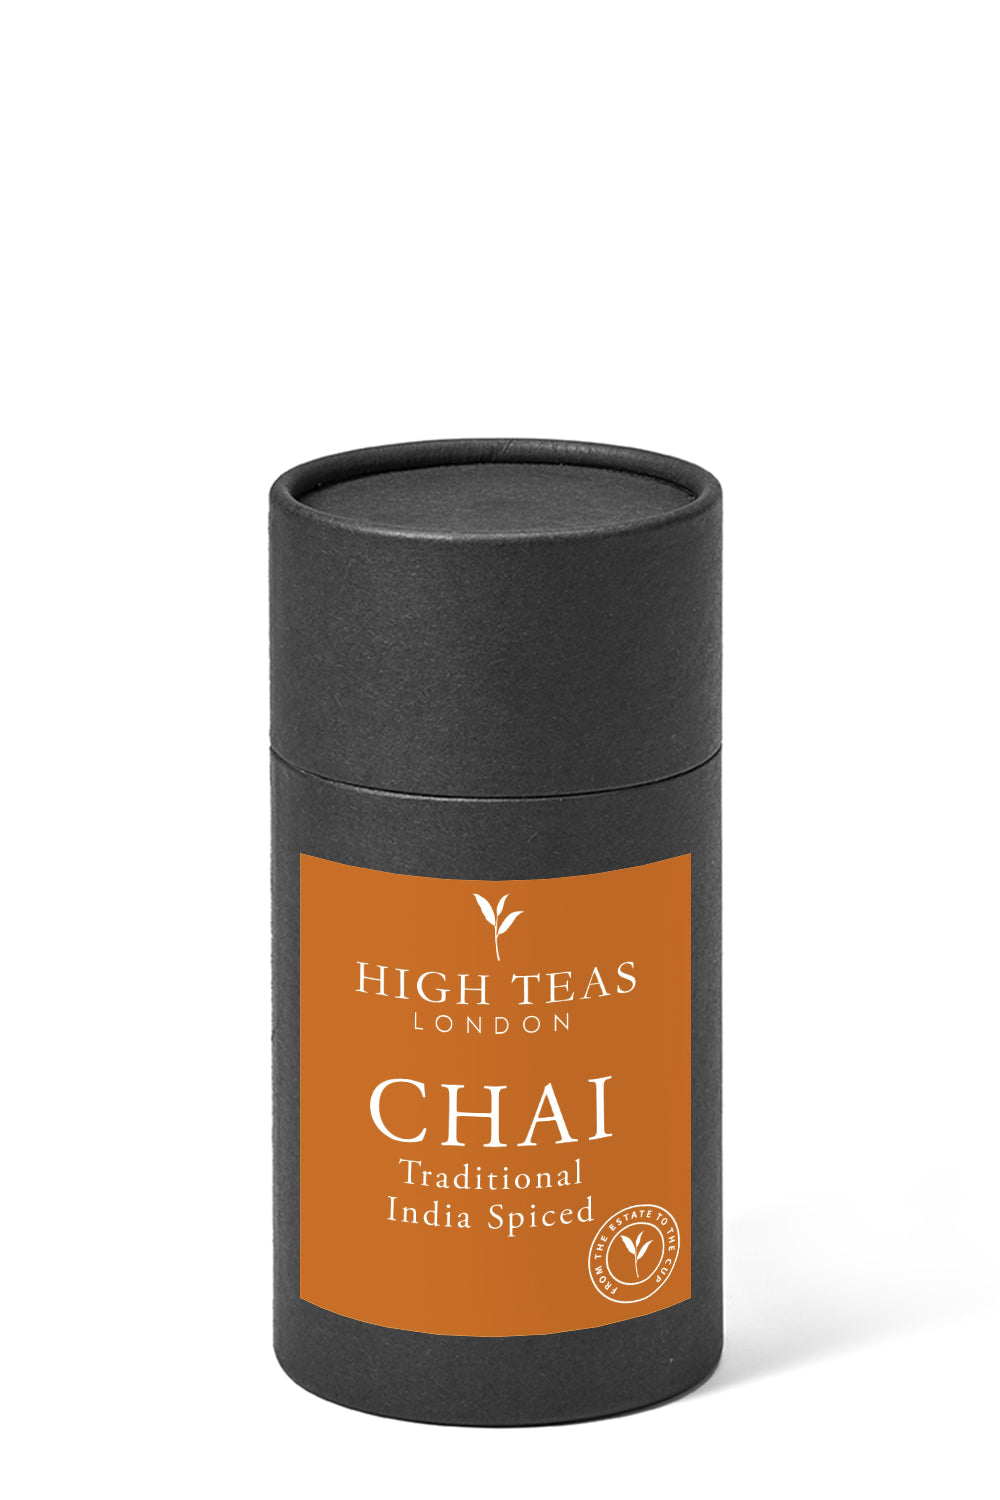 Traditional Indian Spiced Chai-60g gift-Loose Leaf Tea-High Teas